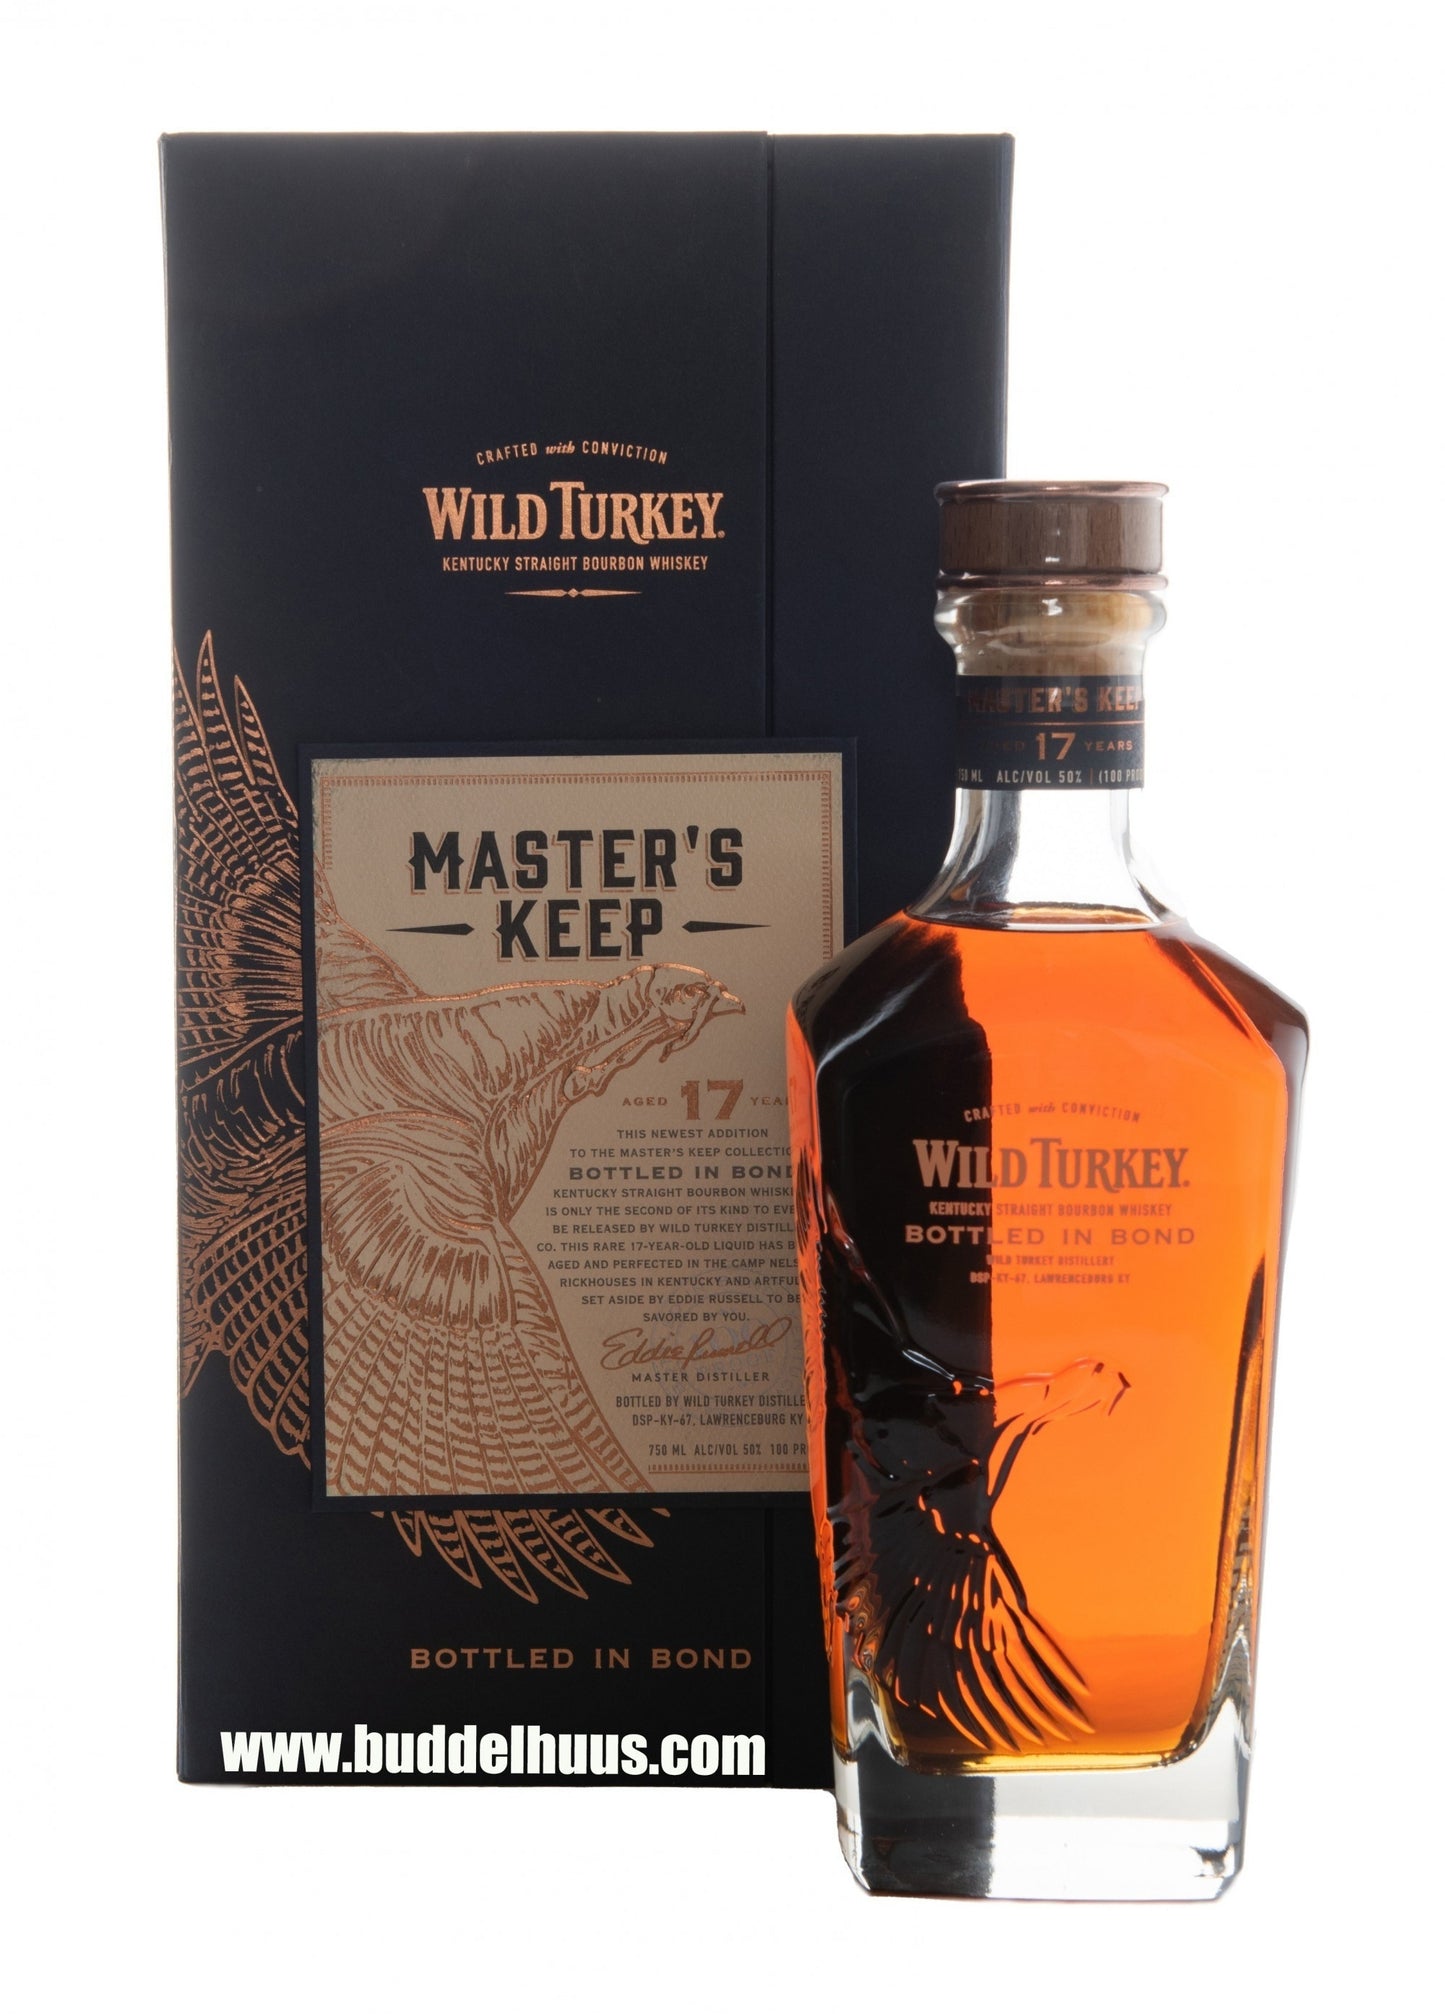 Wild Turkey Master's Keep 17 yo Bottled in Bond